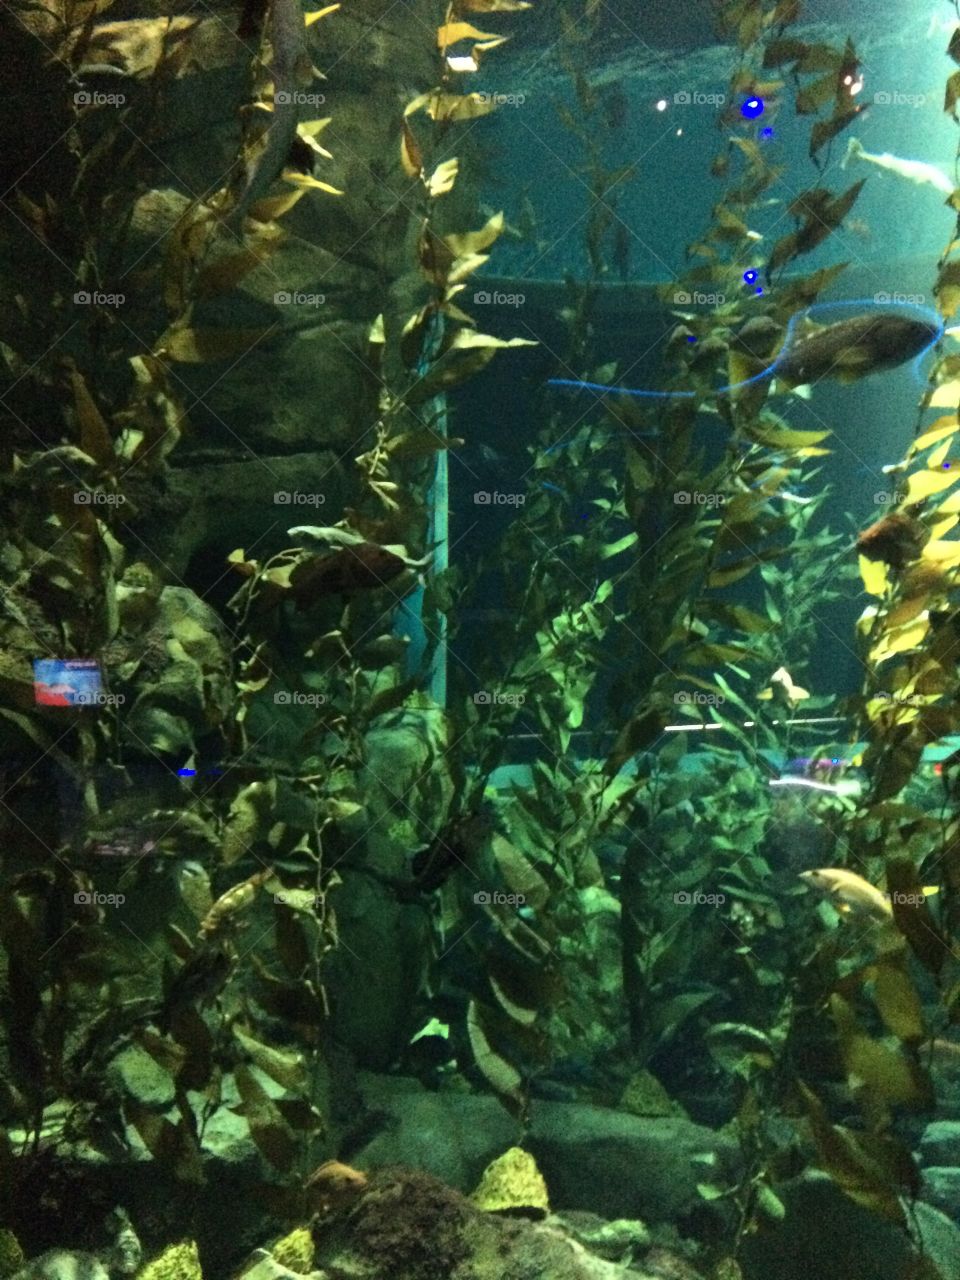 Underwater plants 